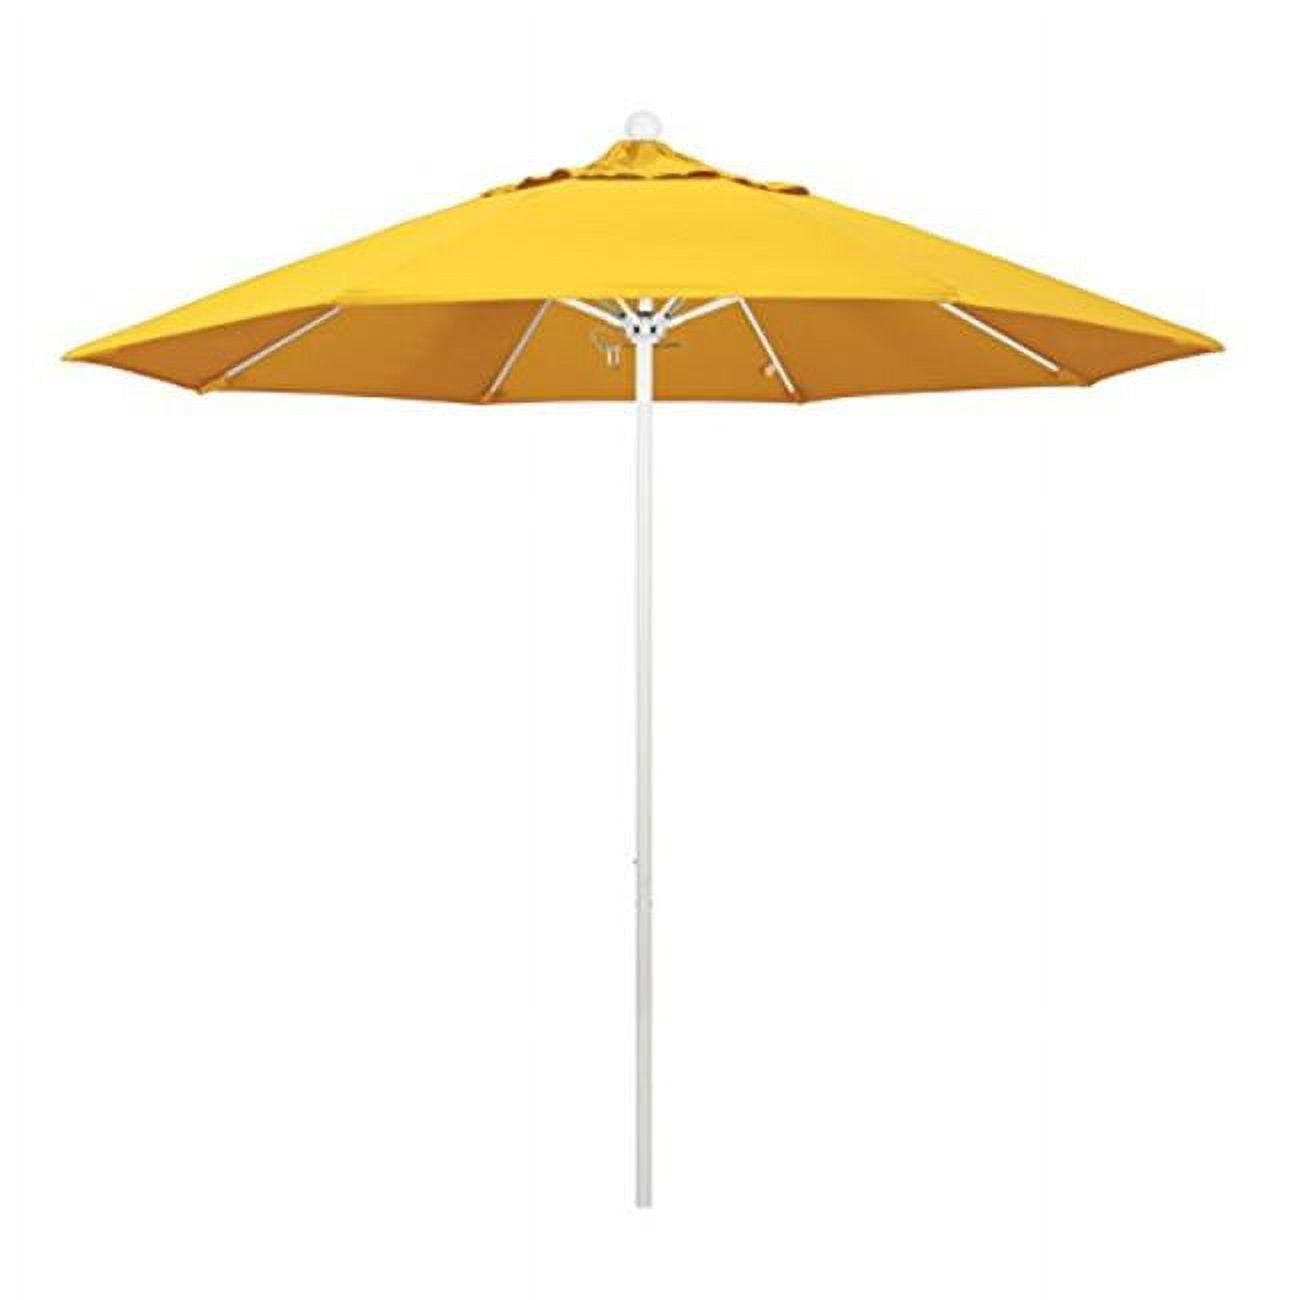 Alto908170-5457 9 Ft. Round Aluminum & Fiberglass Umbrella, Push Open & White Pole - Sunbrella Sunflower Yellow